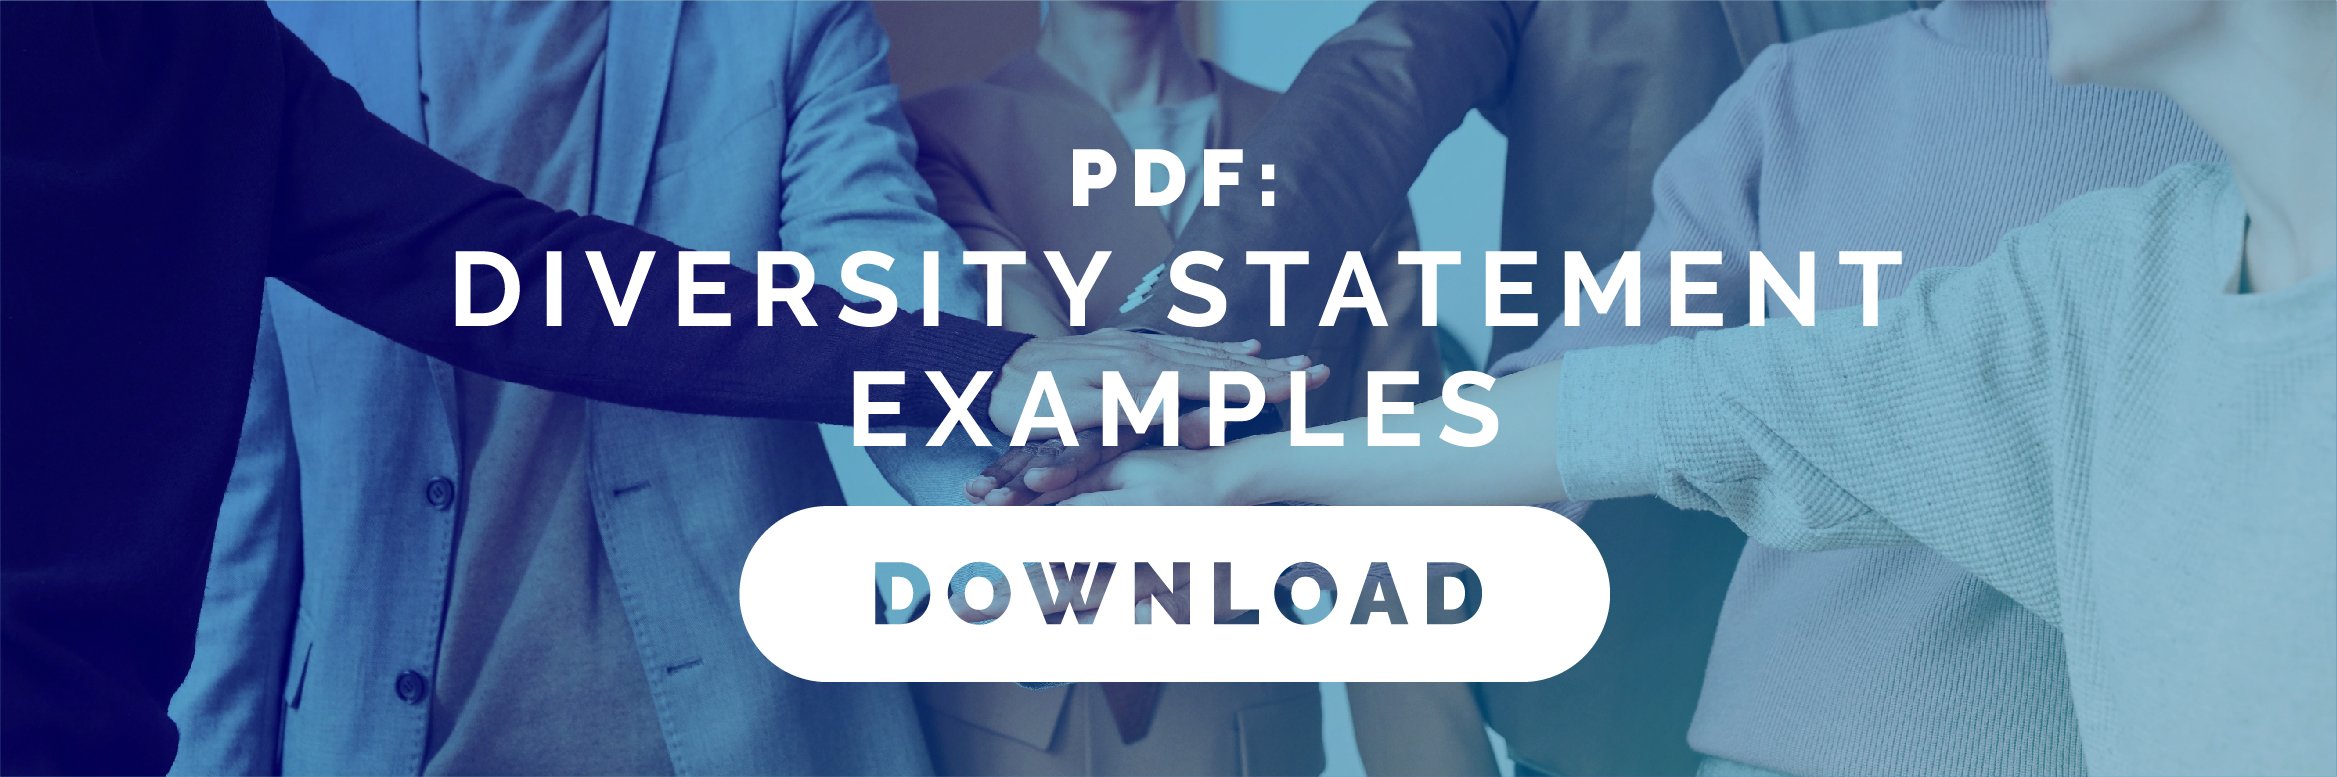 diversity statement examples download